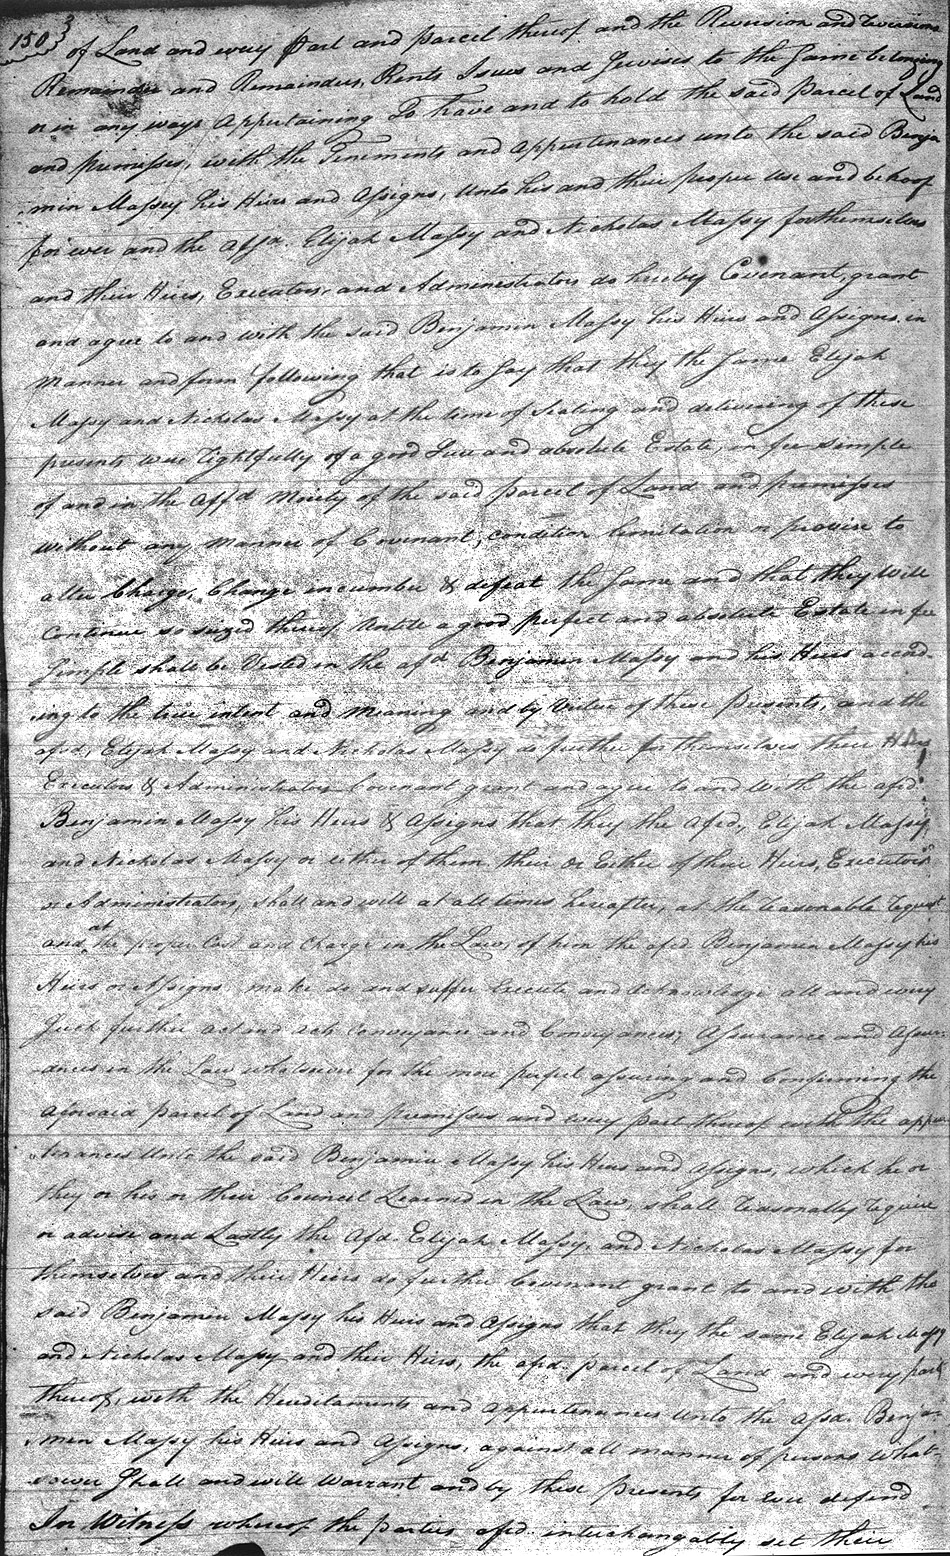 Maryland Land Records, Kent County, Elijah & Nicholas Massey to Benjamin Massey, March 15, 1802